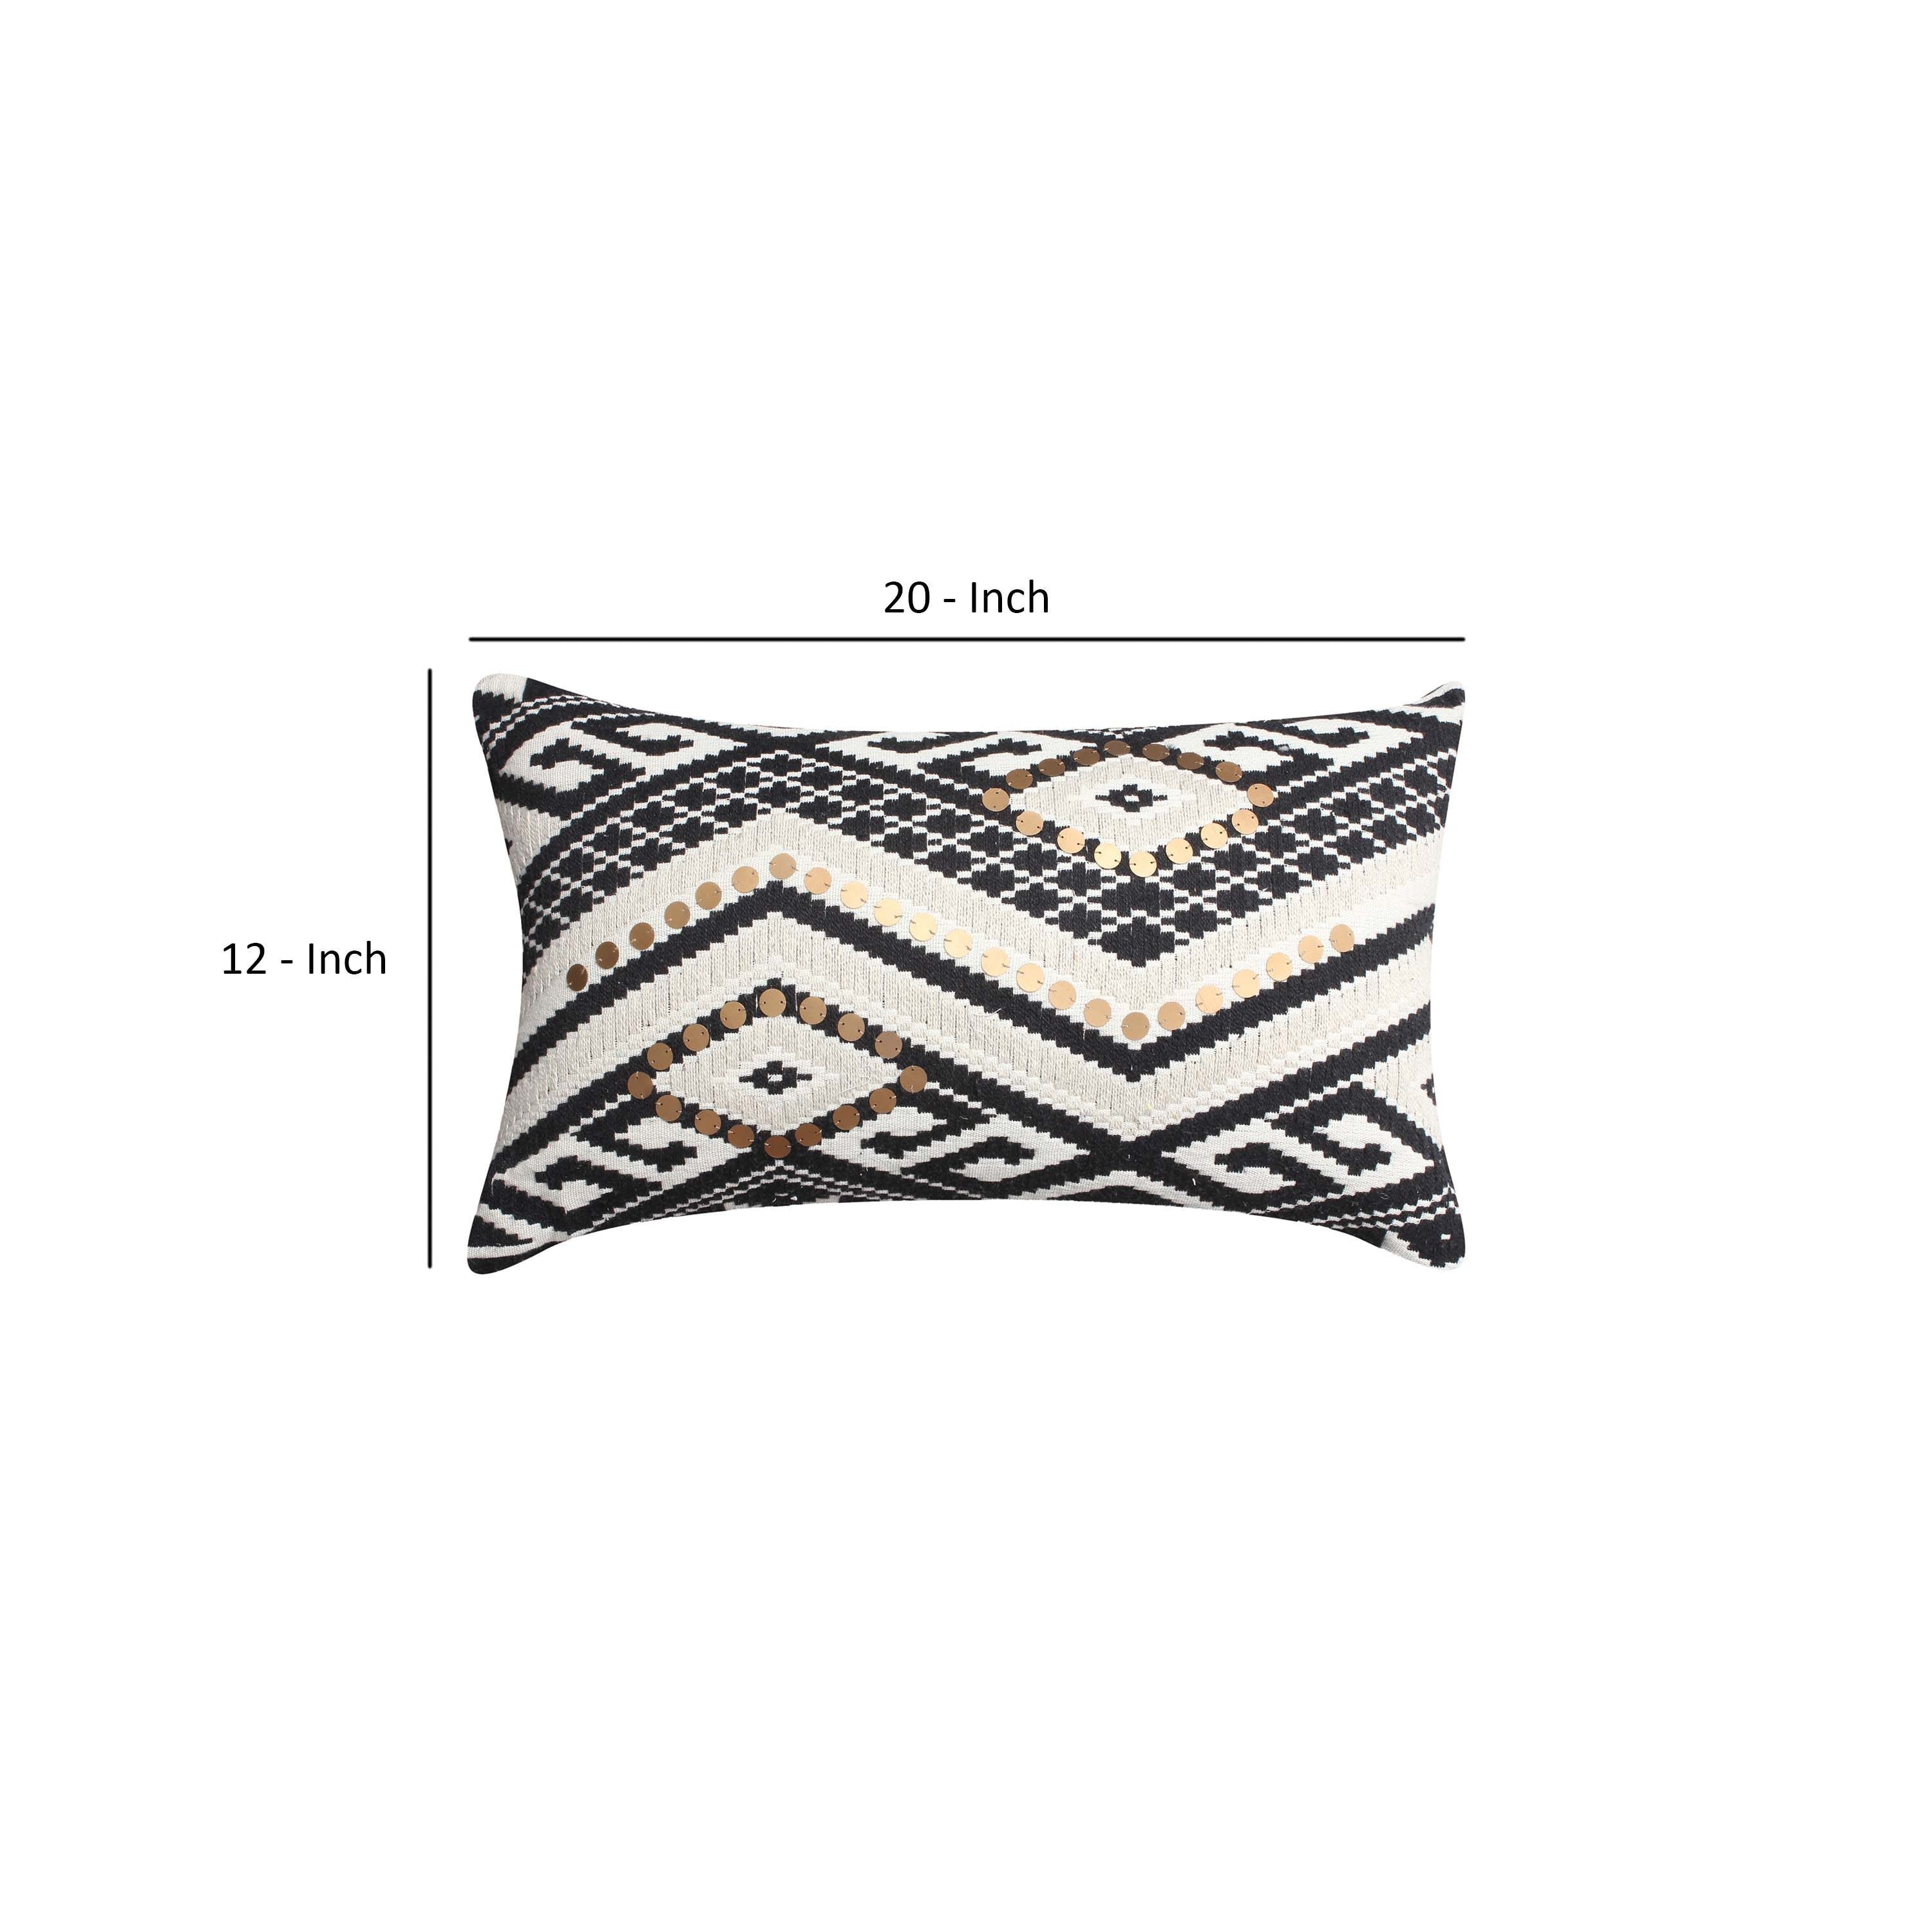 Rectangular Handwoven Jacquard Accent Lumbar Throw Pillow, Sequins, Geometric Design - White, Black